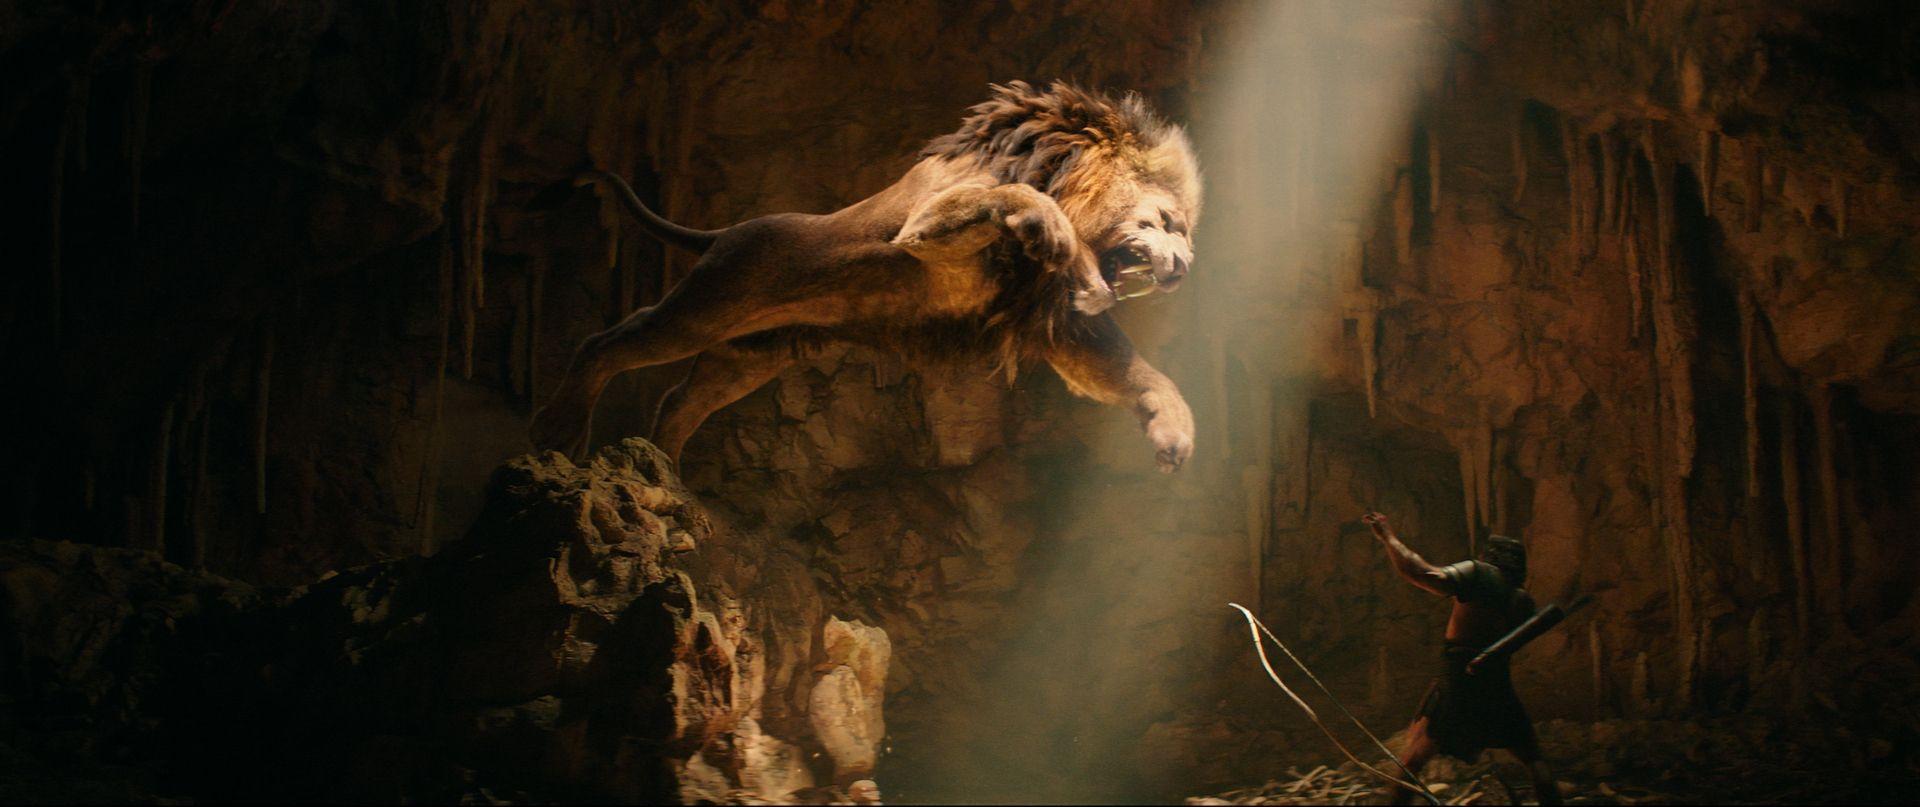 Hercules Image: Dwayne Johnson Battles a Lion, a Giant Boar